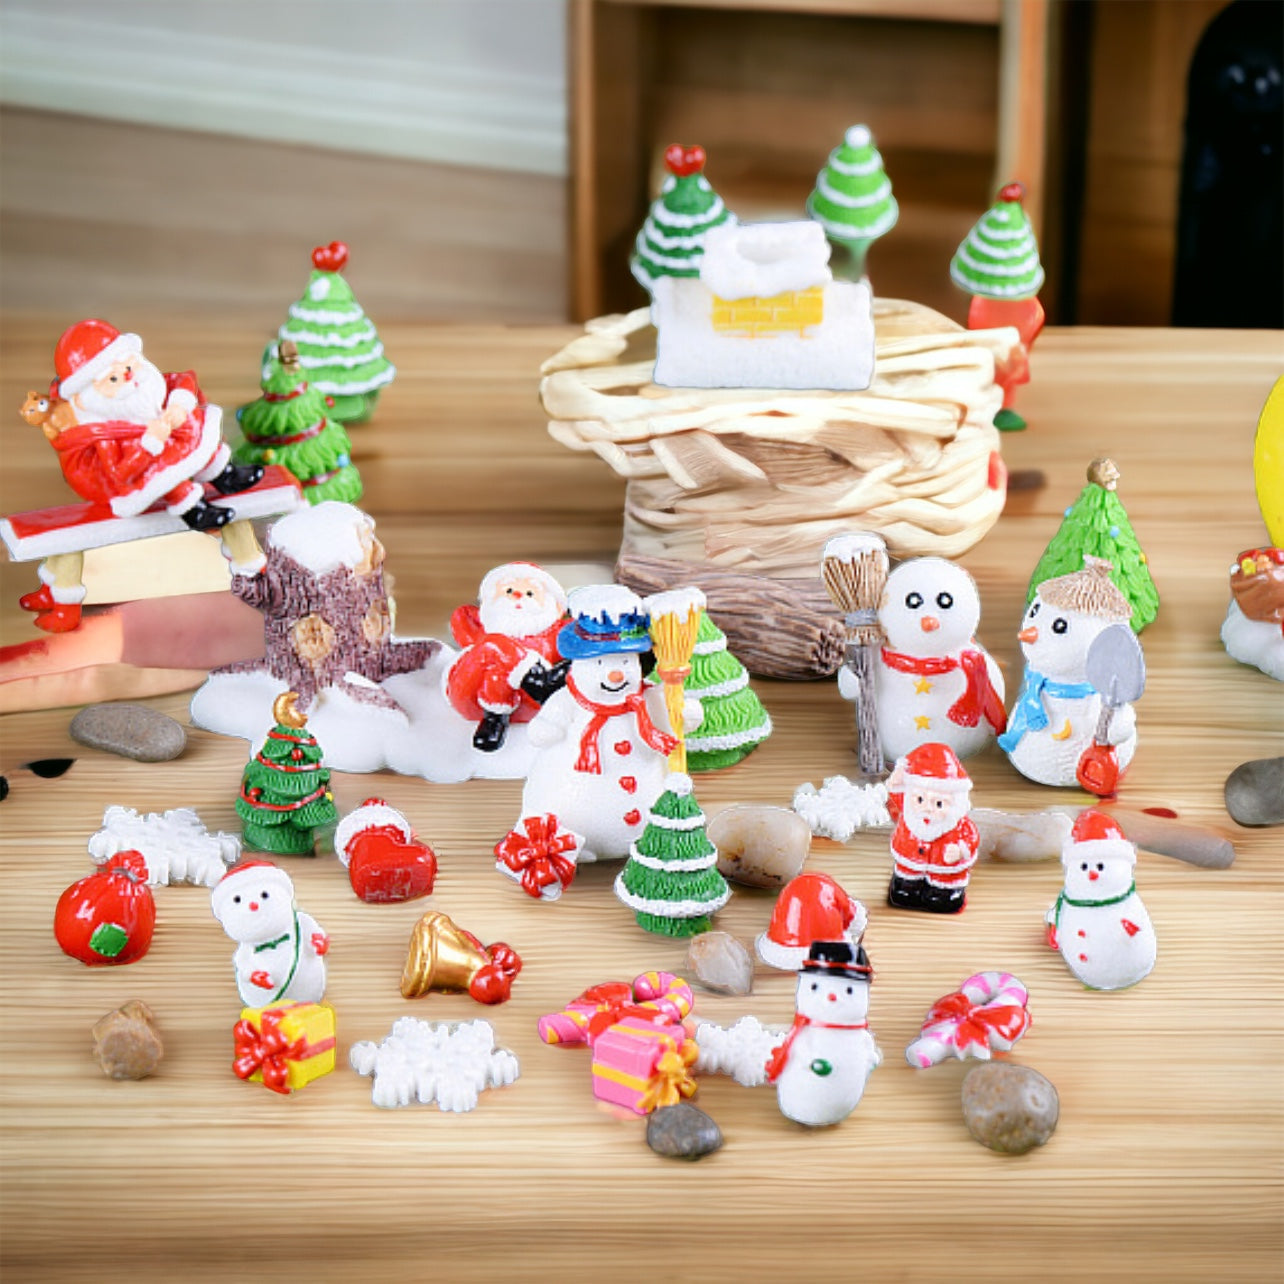 NEW! Christmas Figurines